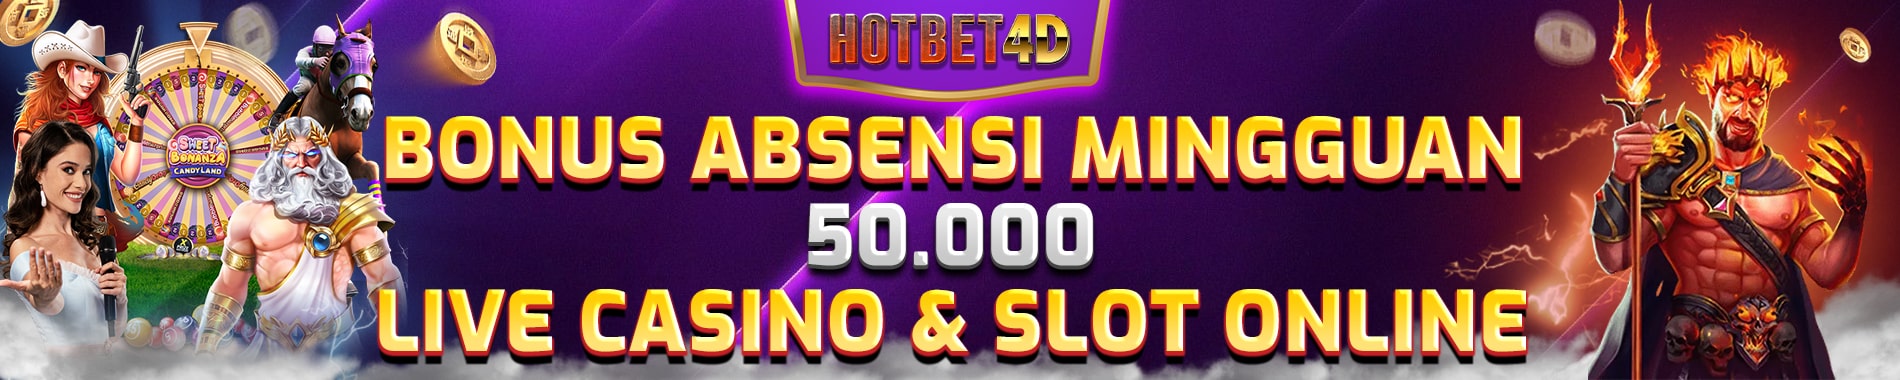 Hotbet4d | Bonus Absensi Mingguan